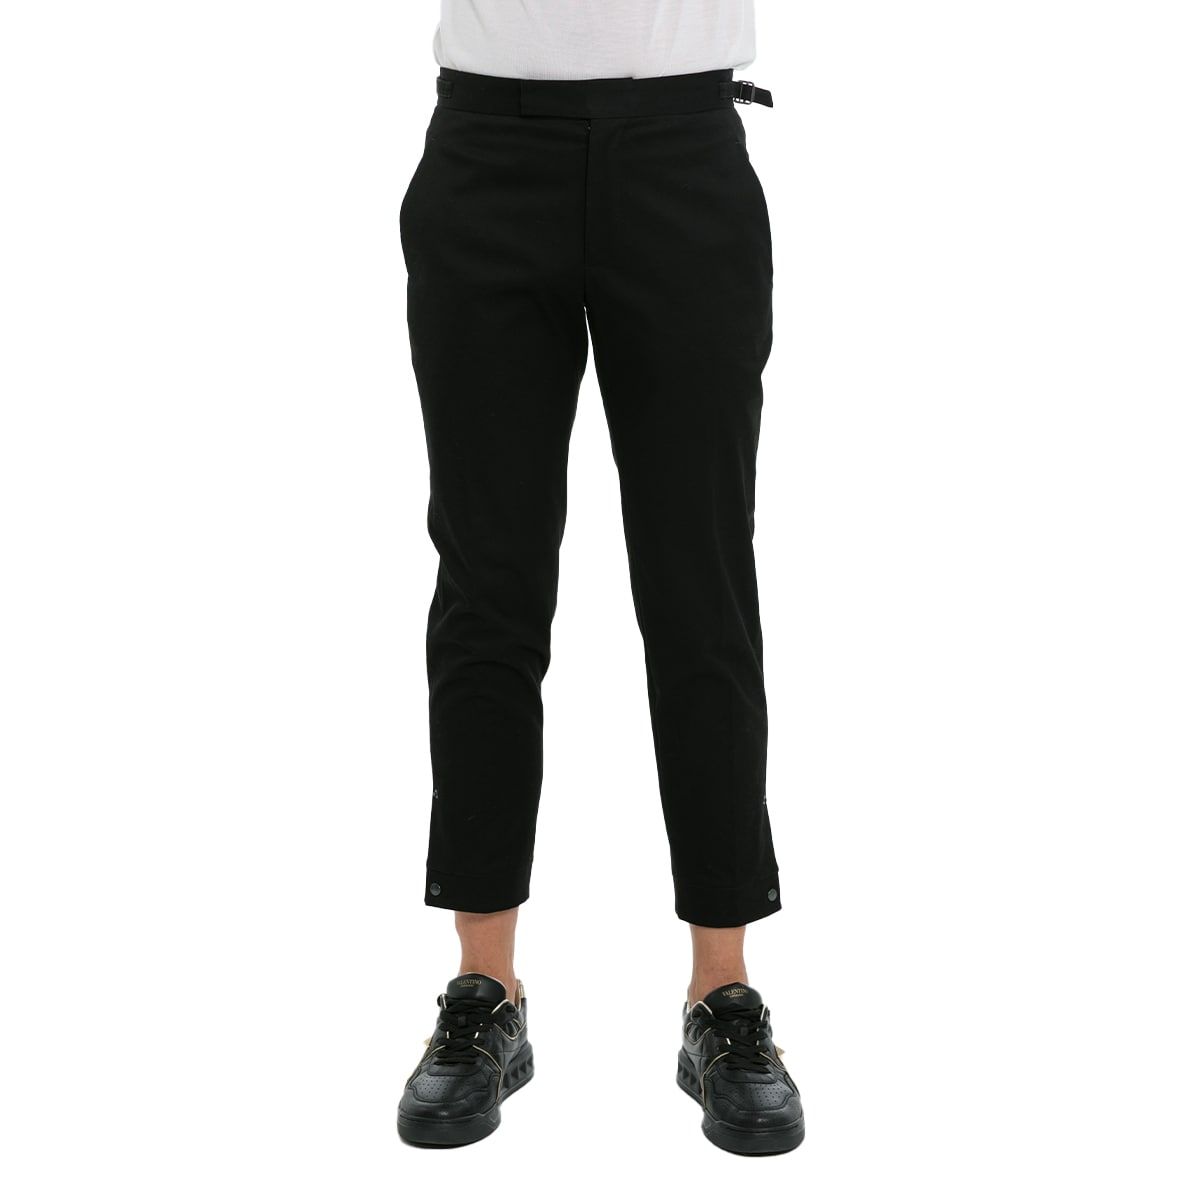 Black Pants With Button Details